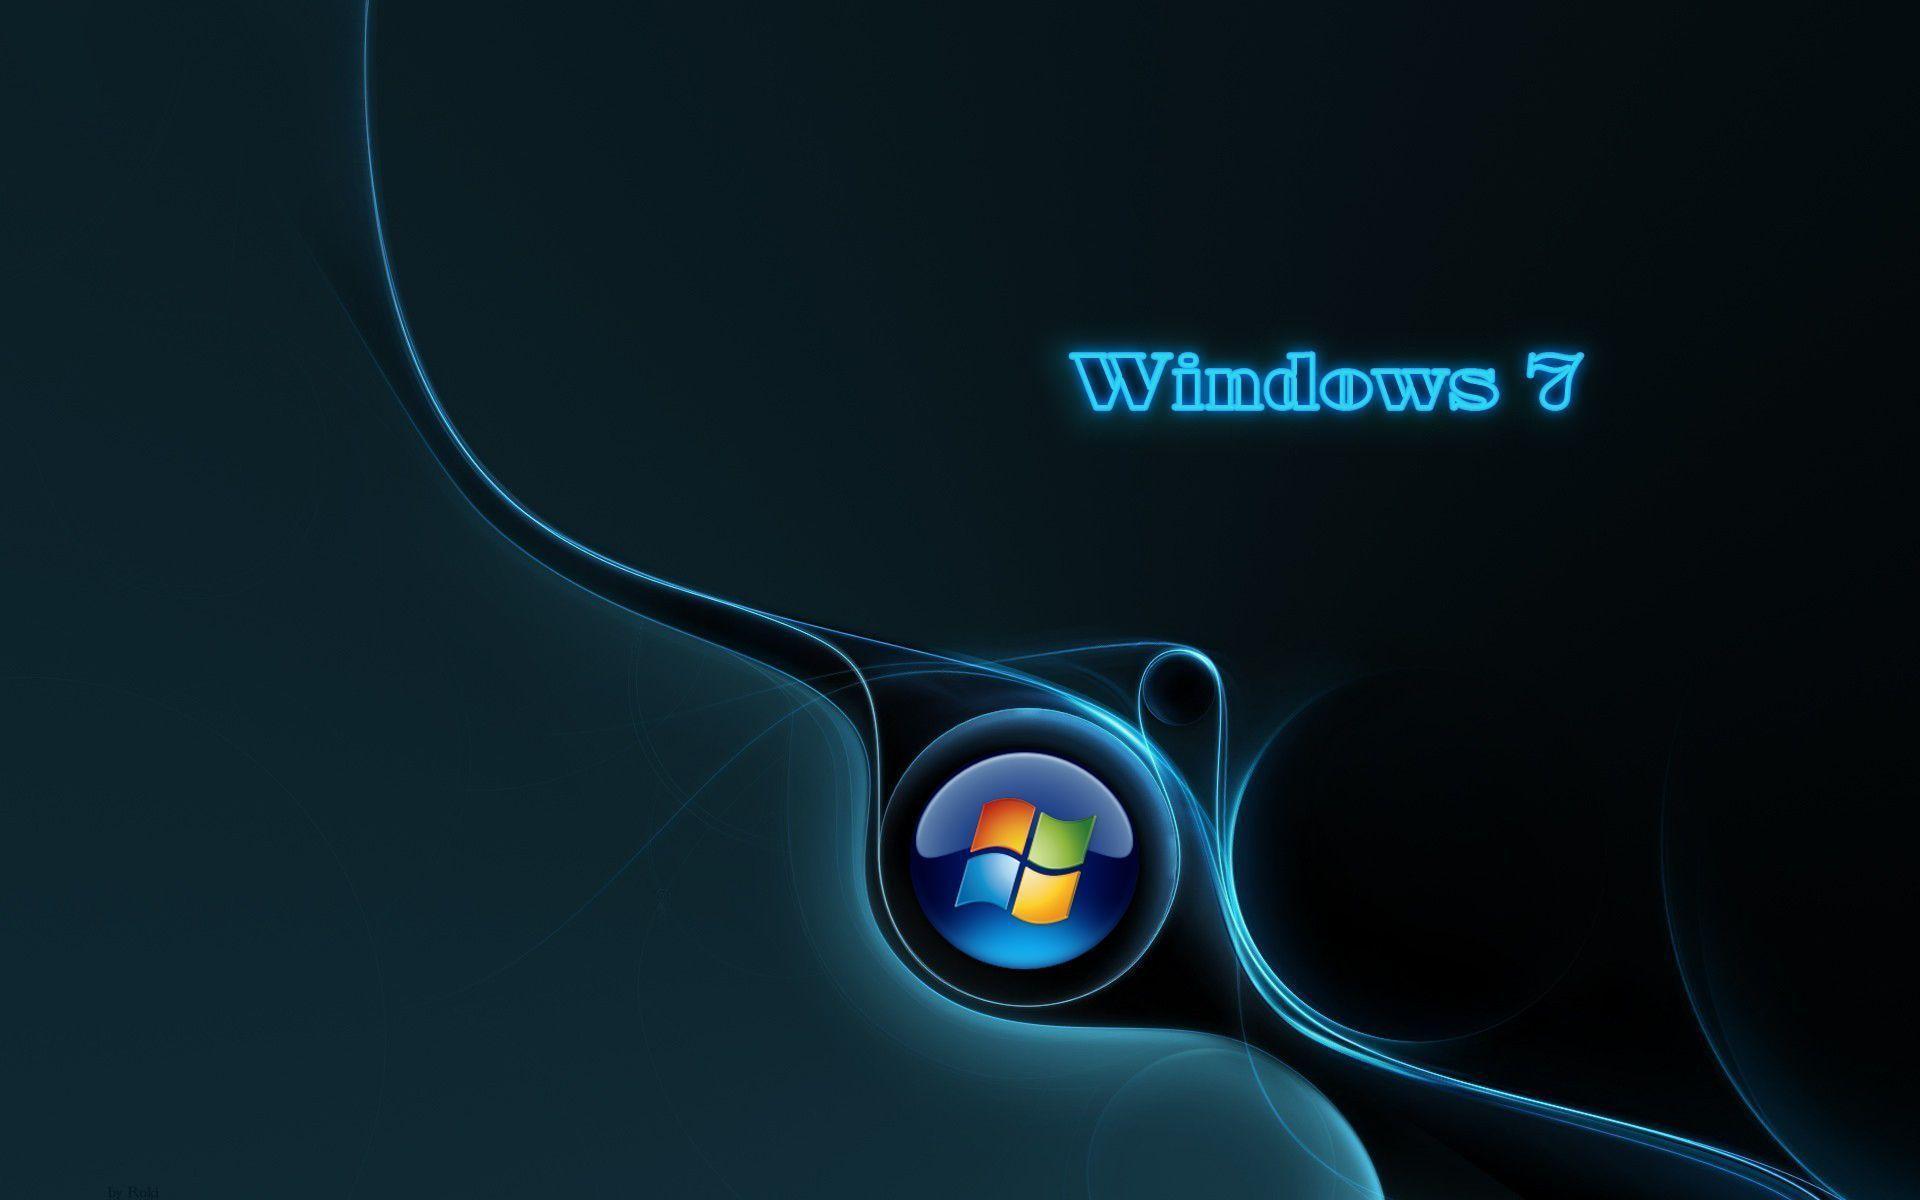 Windows 7 Background Wallpaper HD Inn. High Definition image